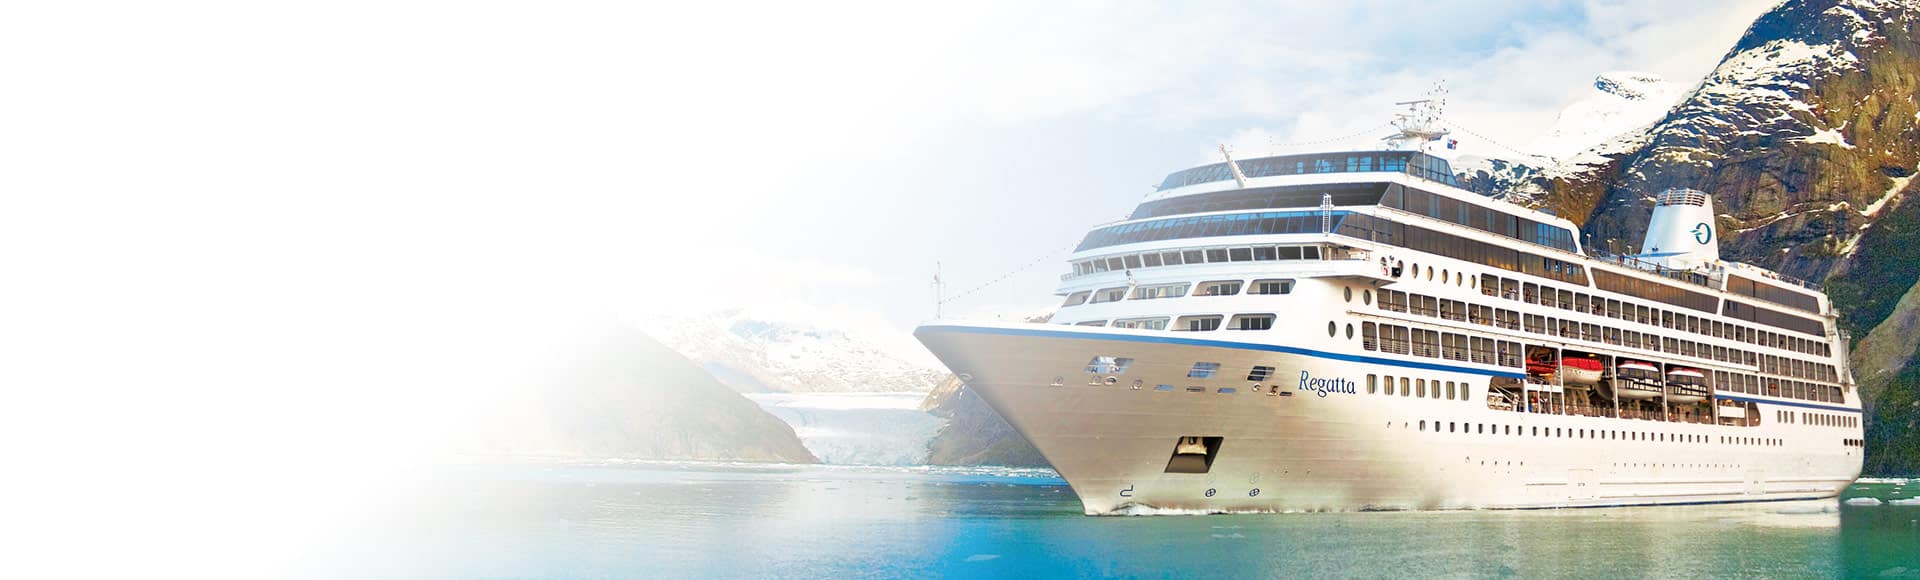 Regatta cruise ship visits a sea port from itinerary